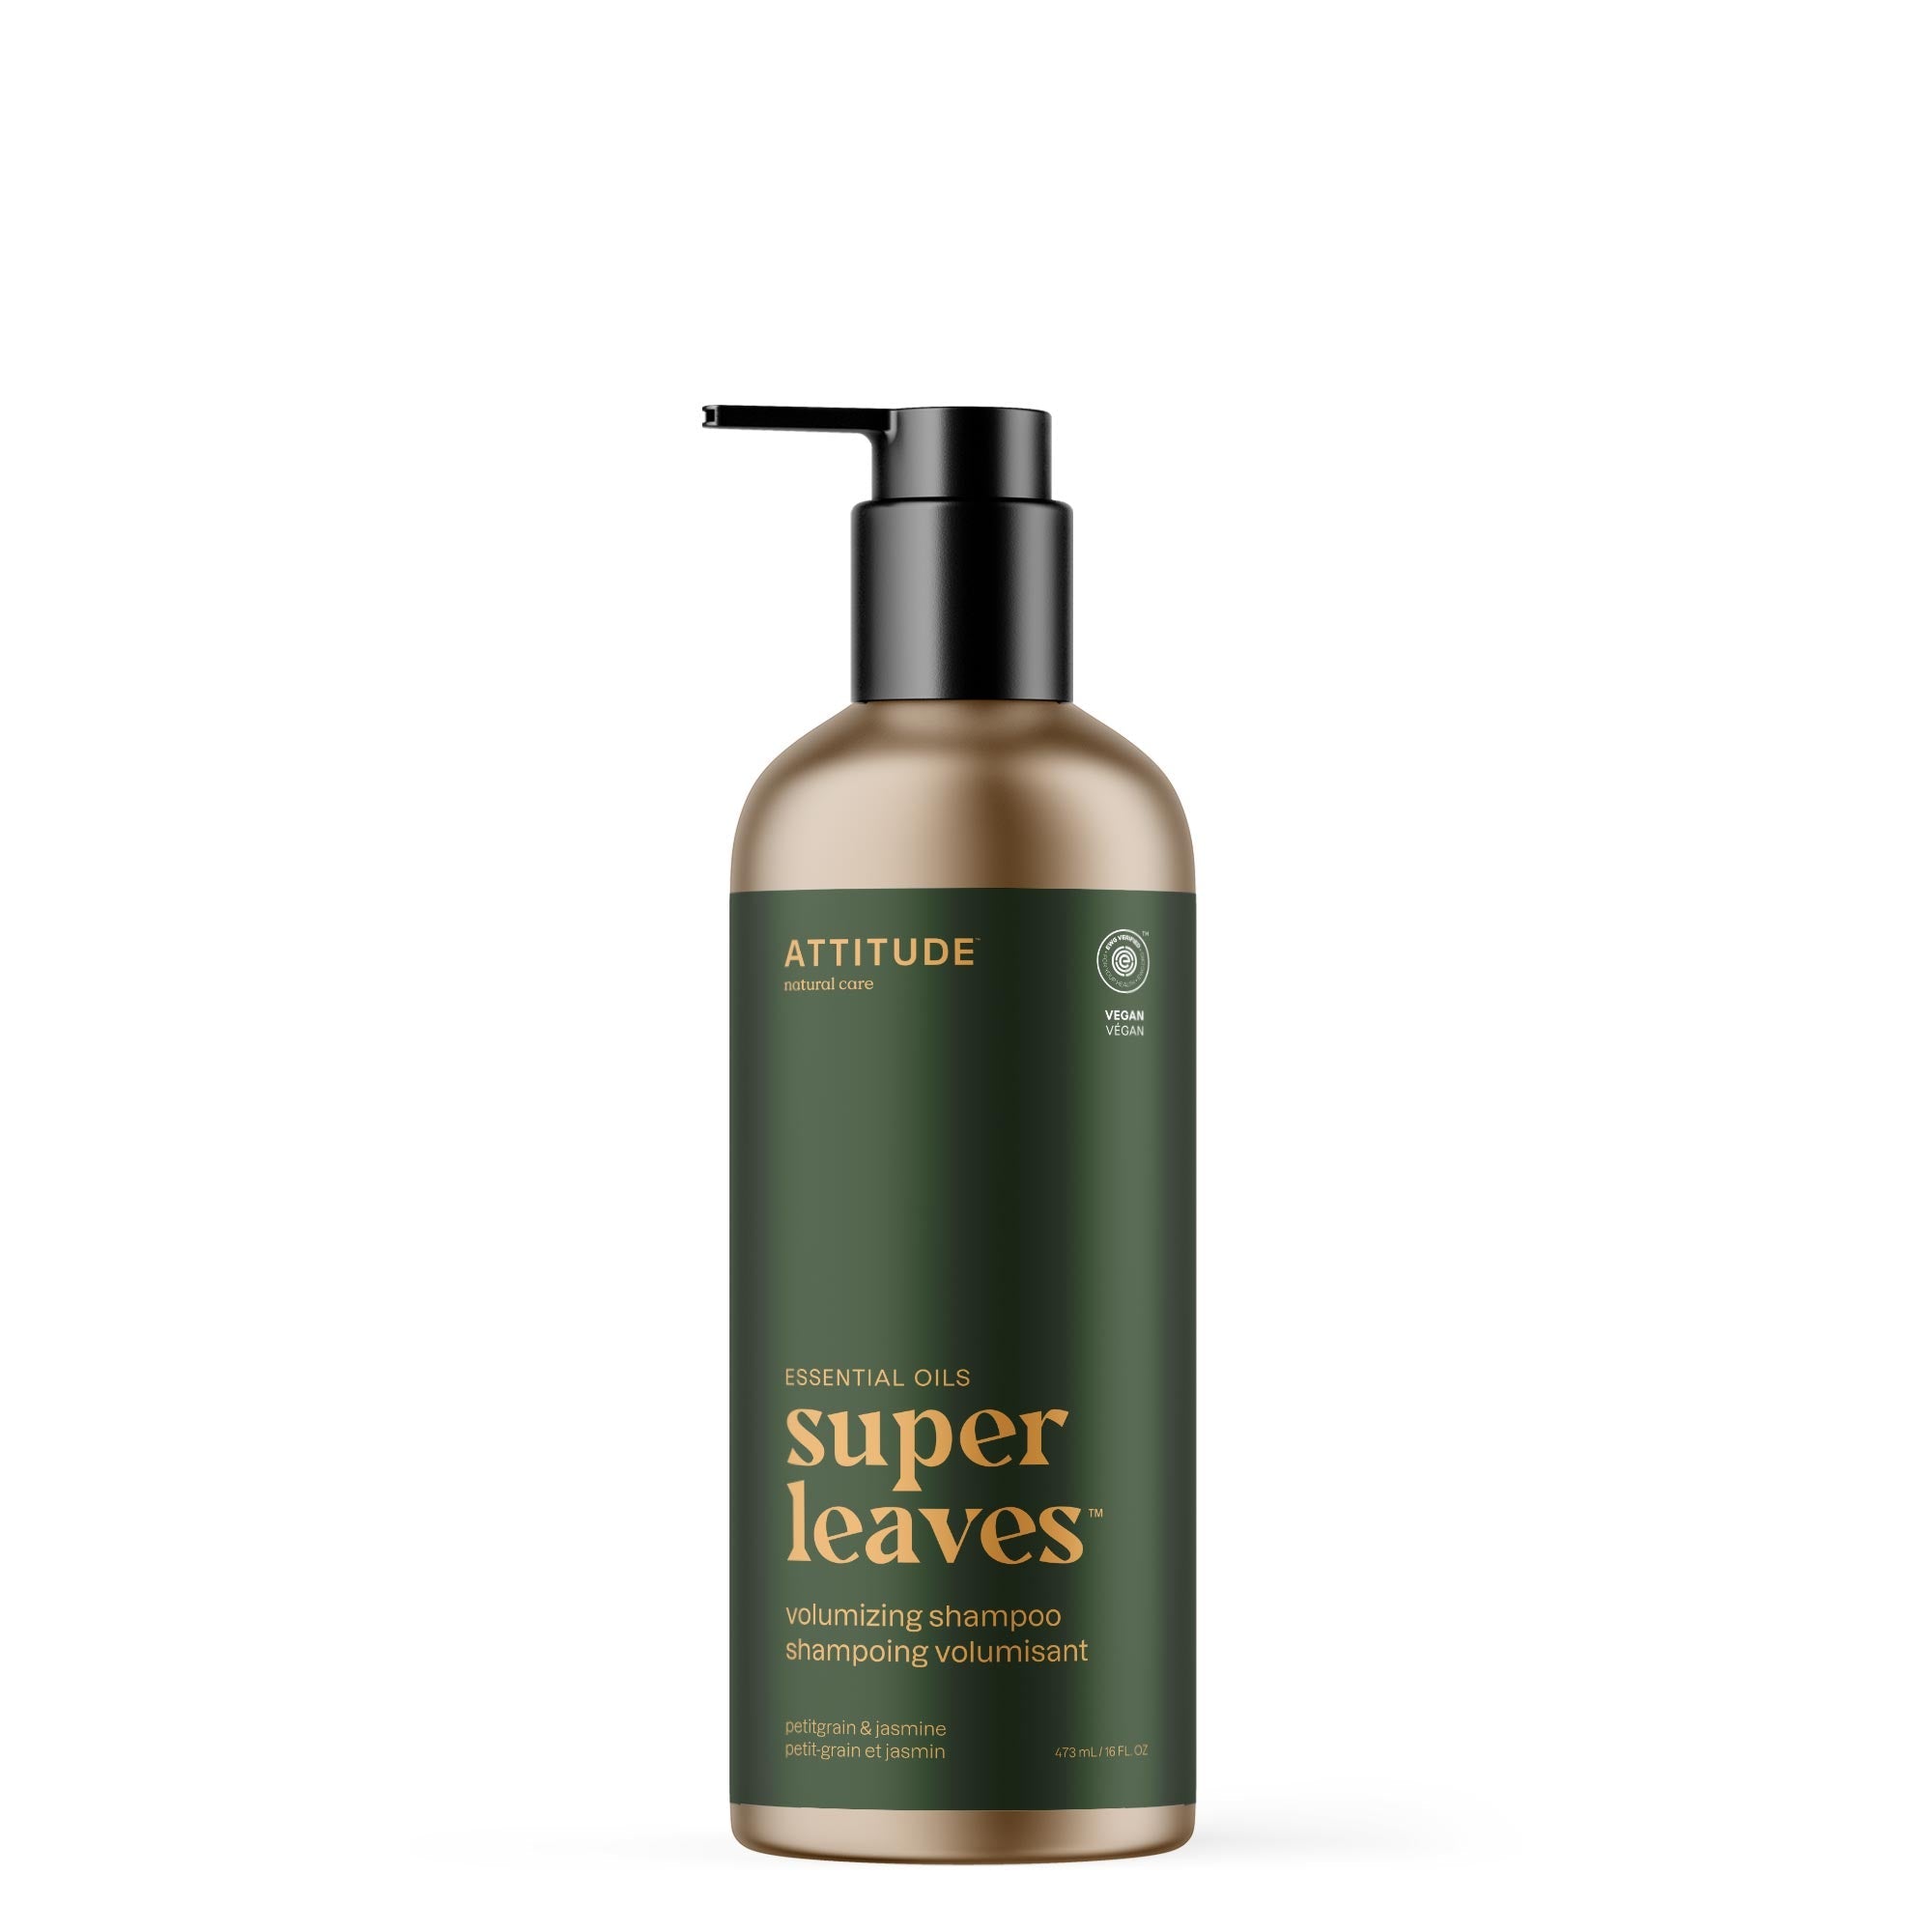 SUPER LEAVES™ | ESSENTIAL OILS Volumizing Shampoo Petitgrain and jasmine